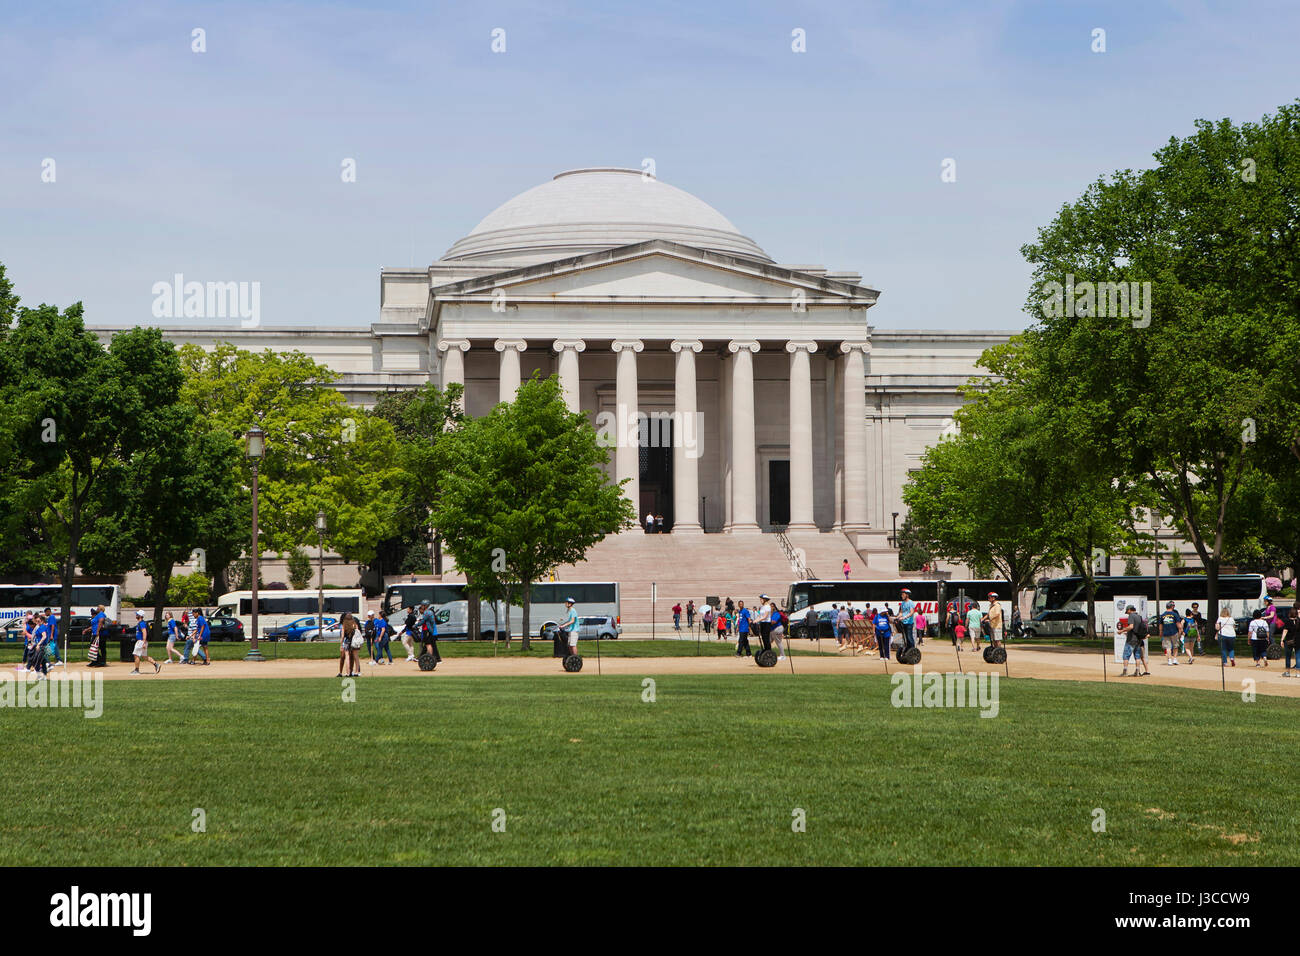 Smithsonian National Gallery of Art building - Washington, DC USA Stock Photo